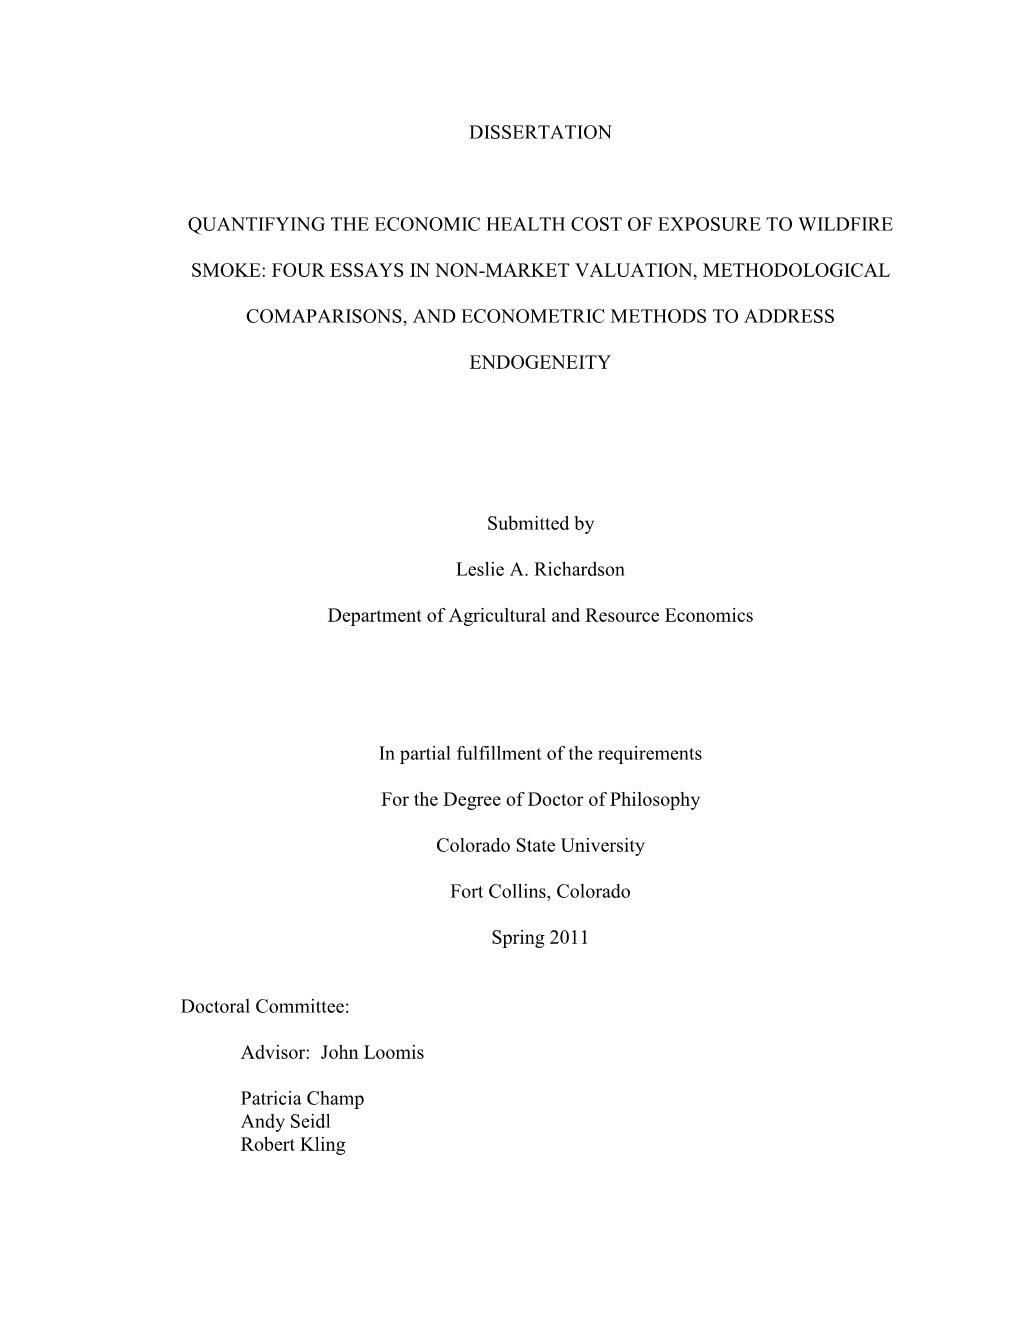 Dissertation Quantifying the Economic